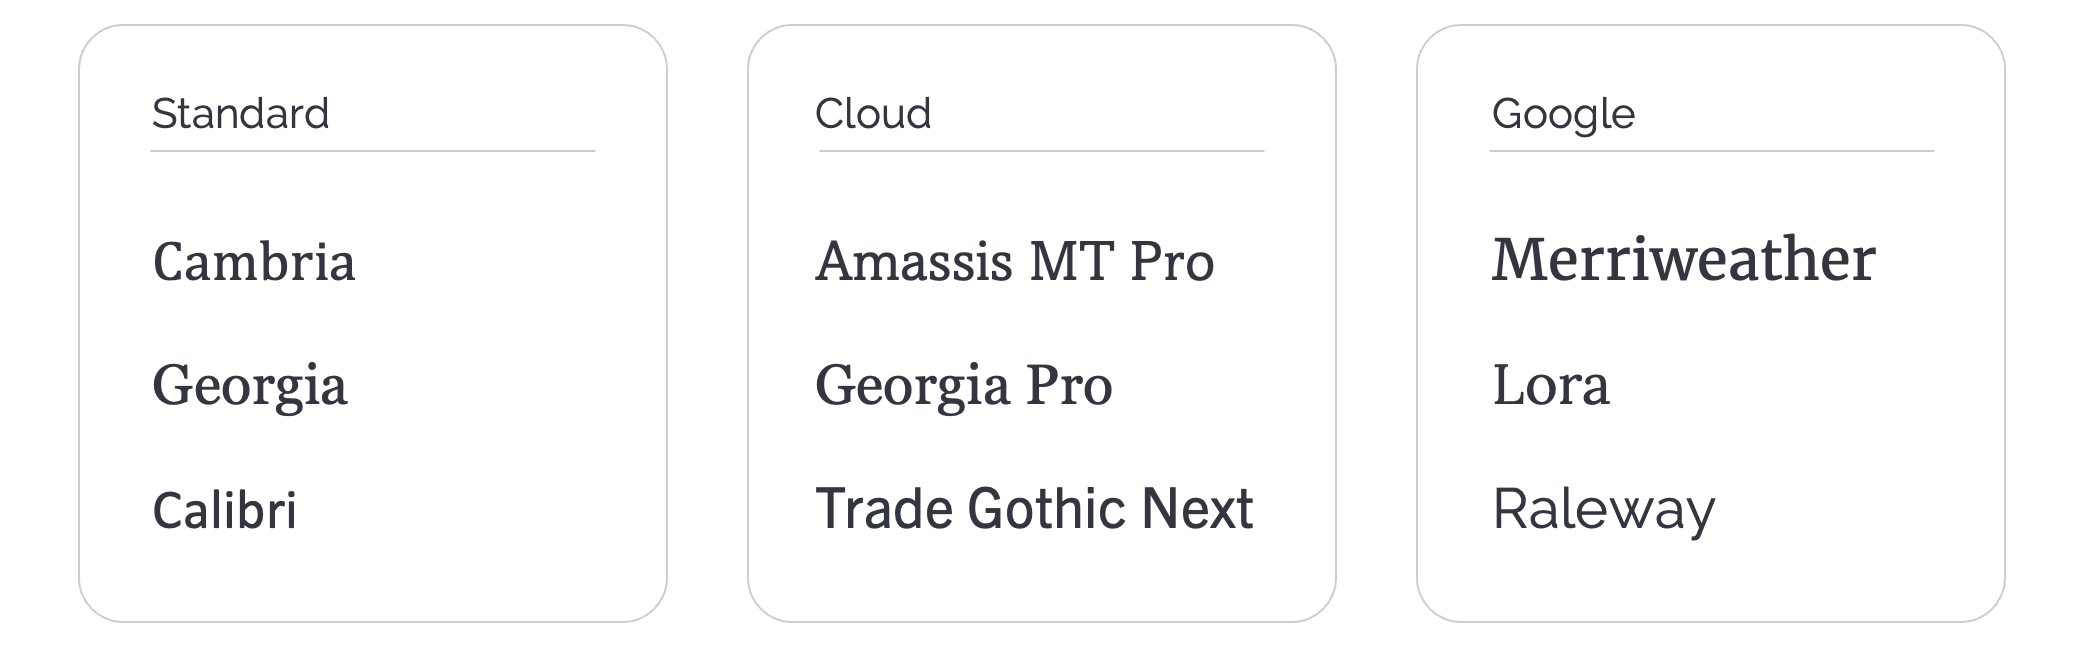 SlideRabbit's Favorites of the best fonts for presentations including standard, cloud, and Google fonts